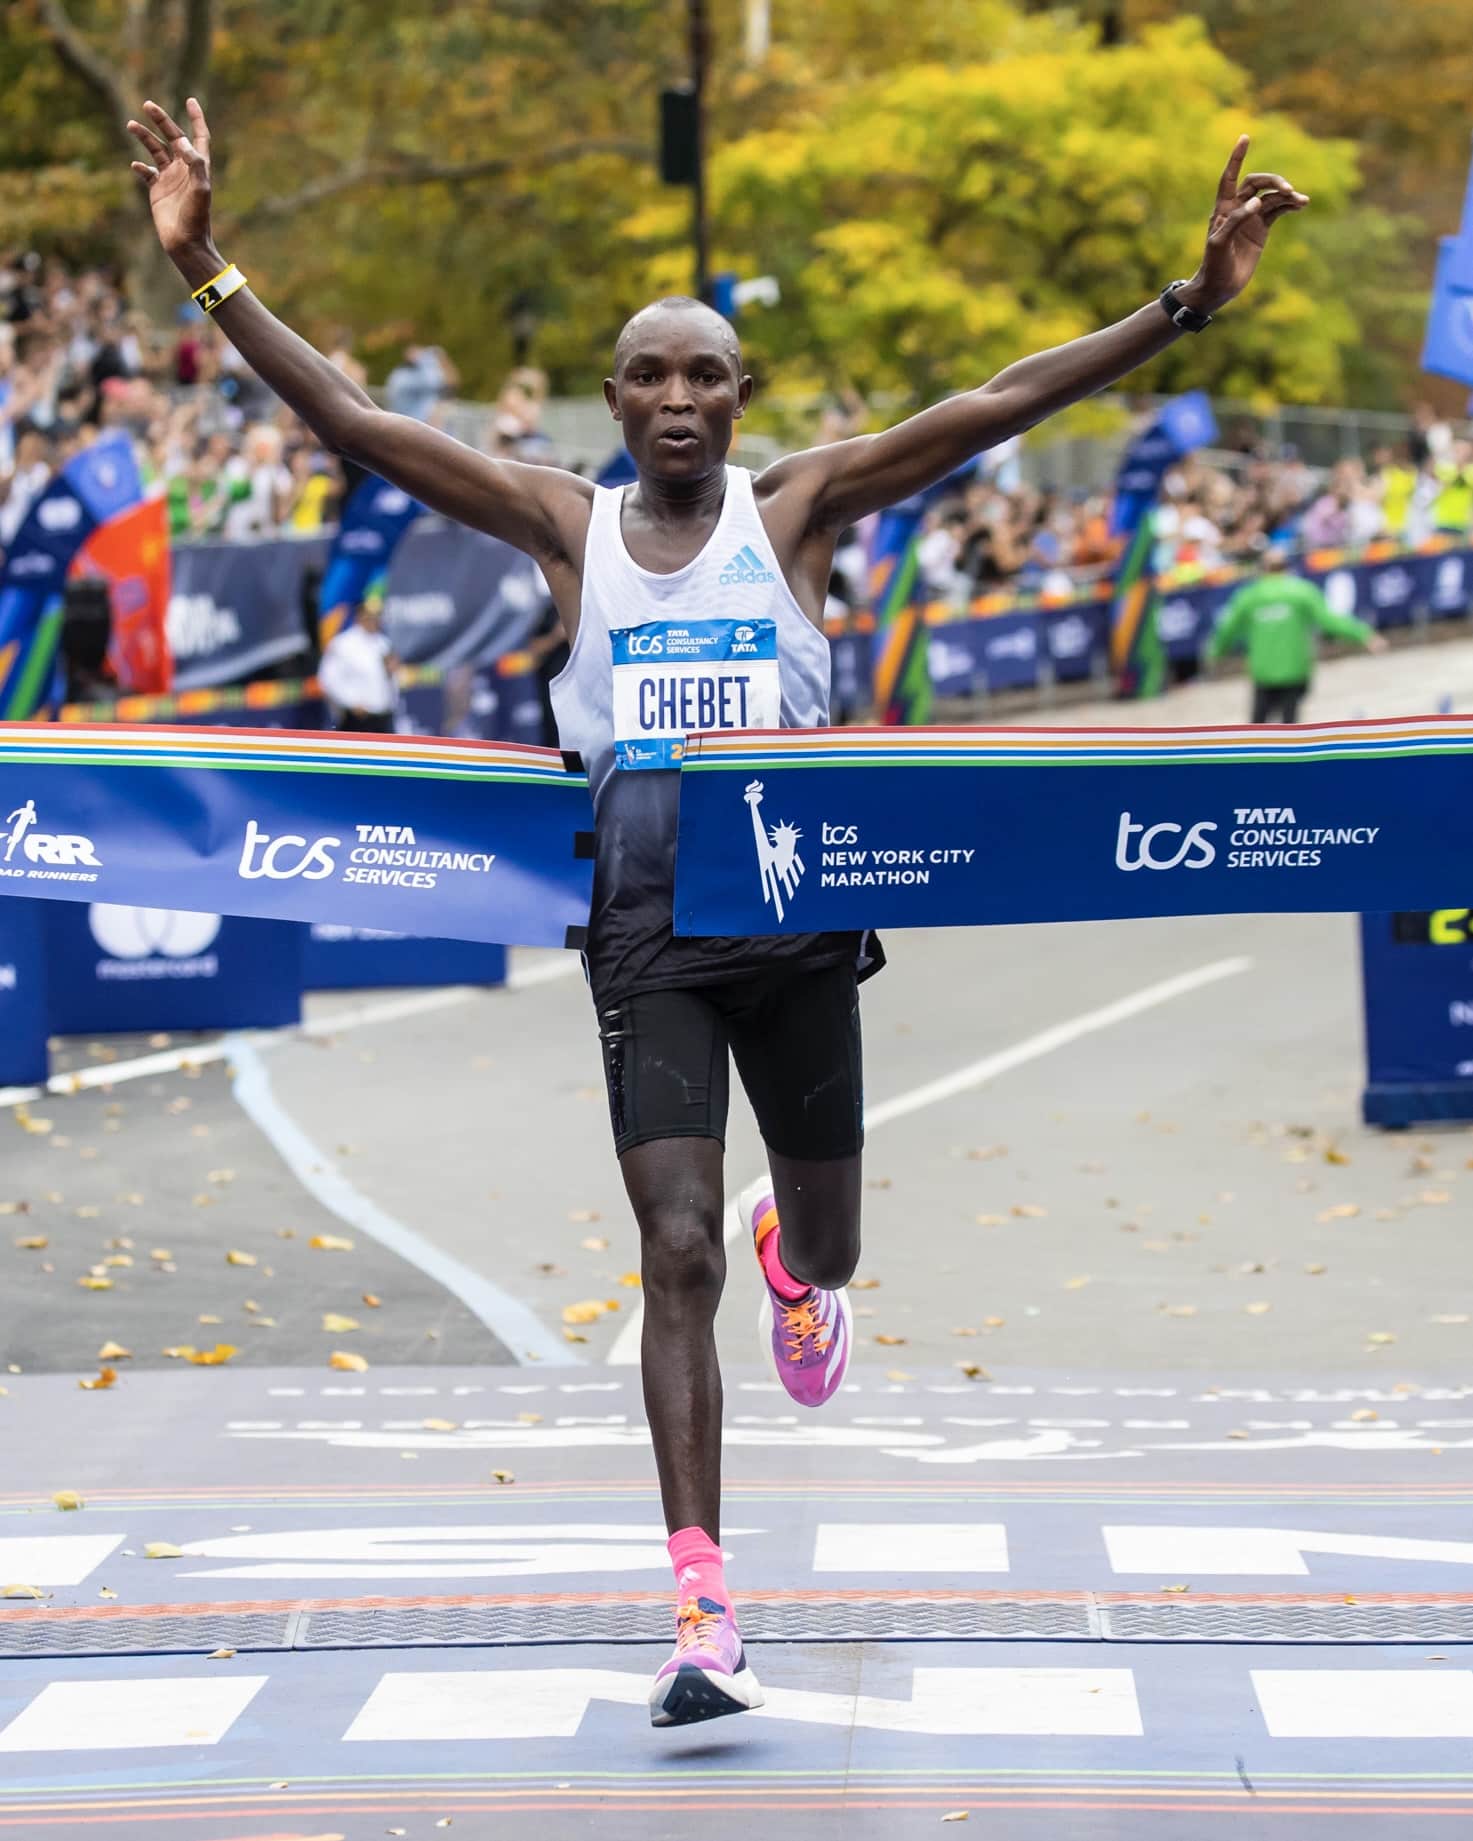 Evans Chebet winning the Boston Marathon